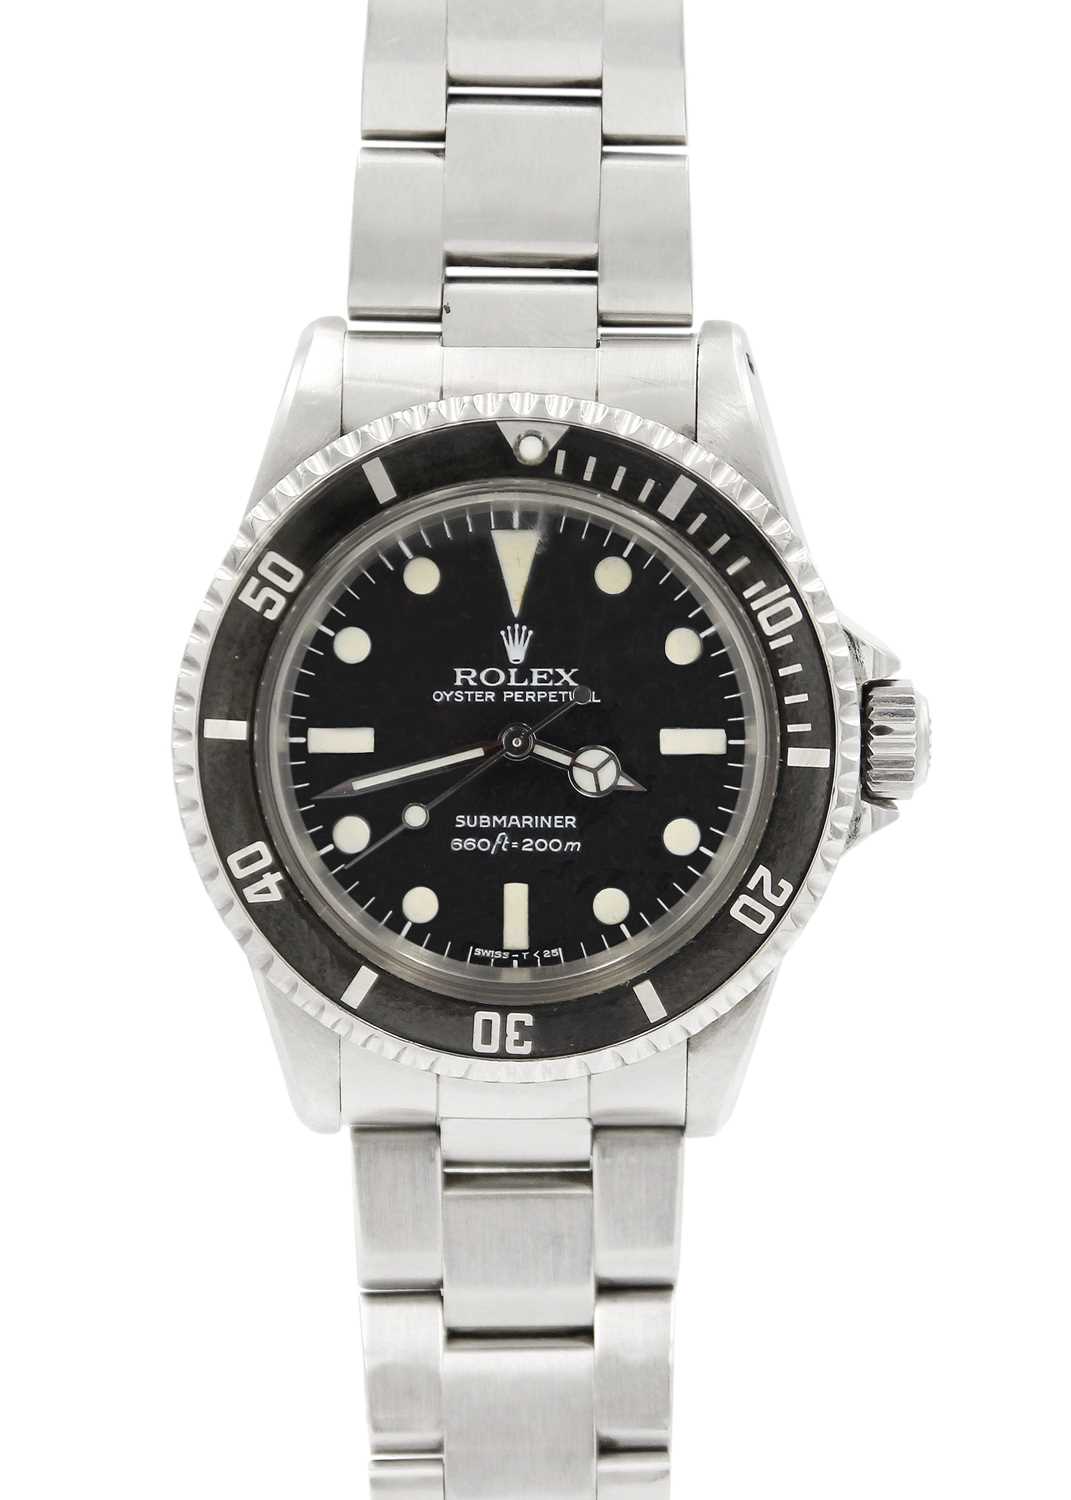 Lot 168 - ROLEX - An Oyster Perpetual Submariner stainless steel gentleman's wristwatch, ref 5513, circa 1978.